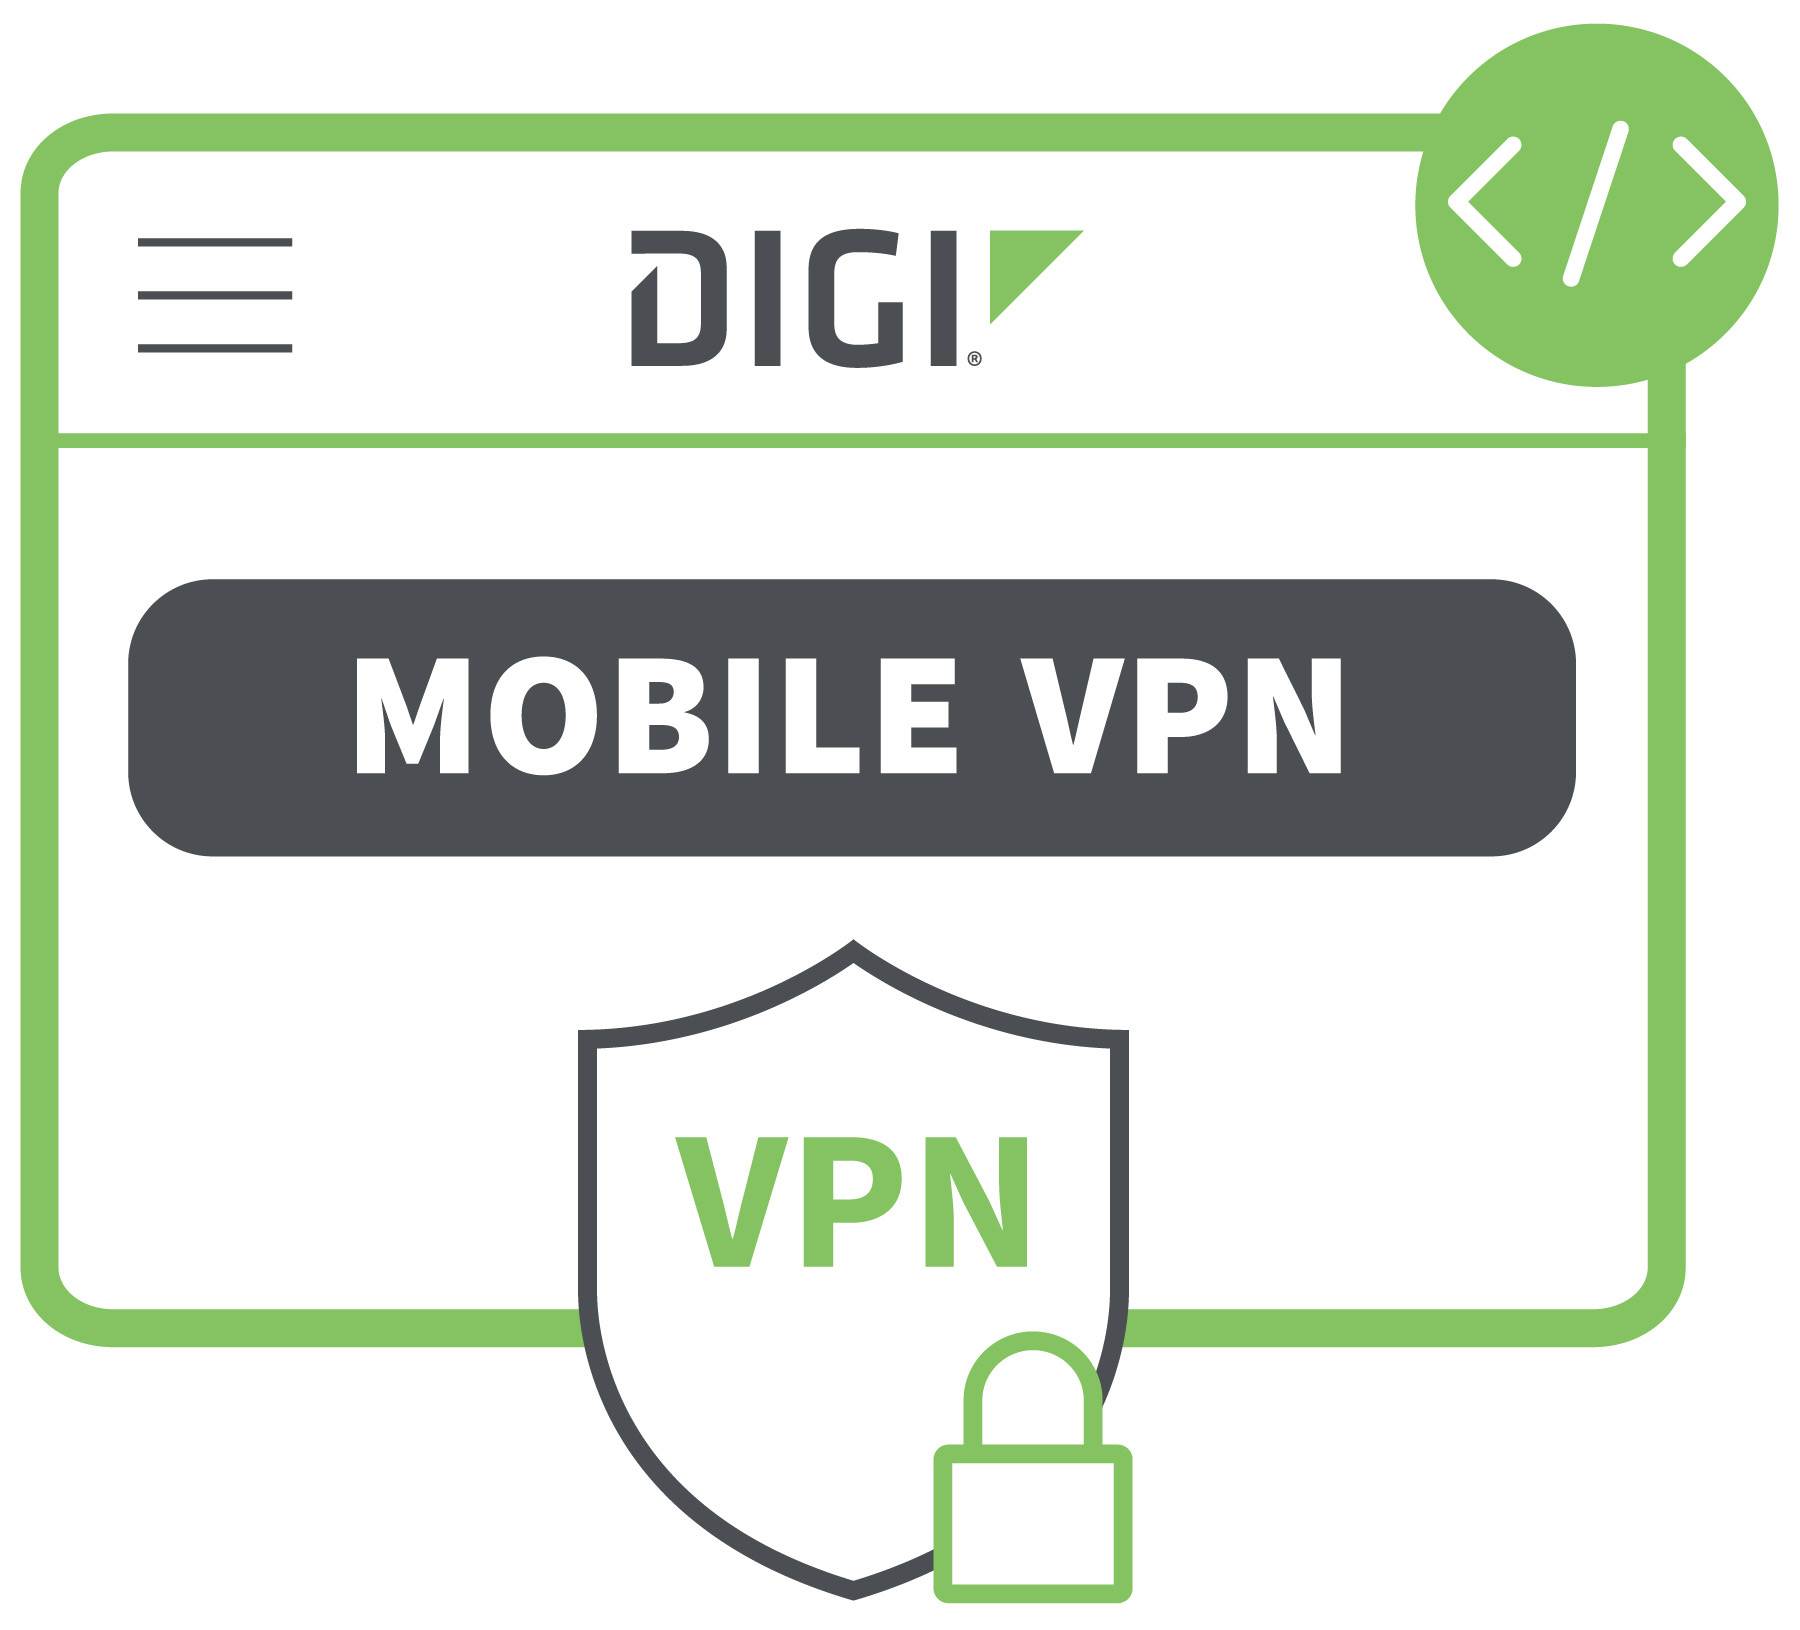 Digi Mobile VPN badge